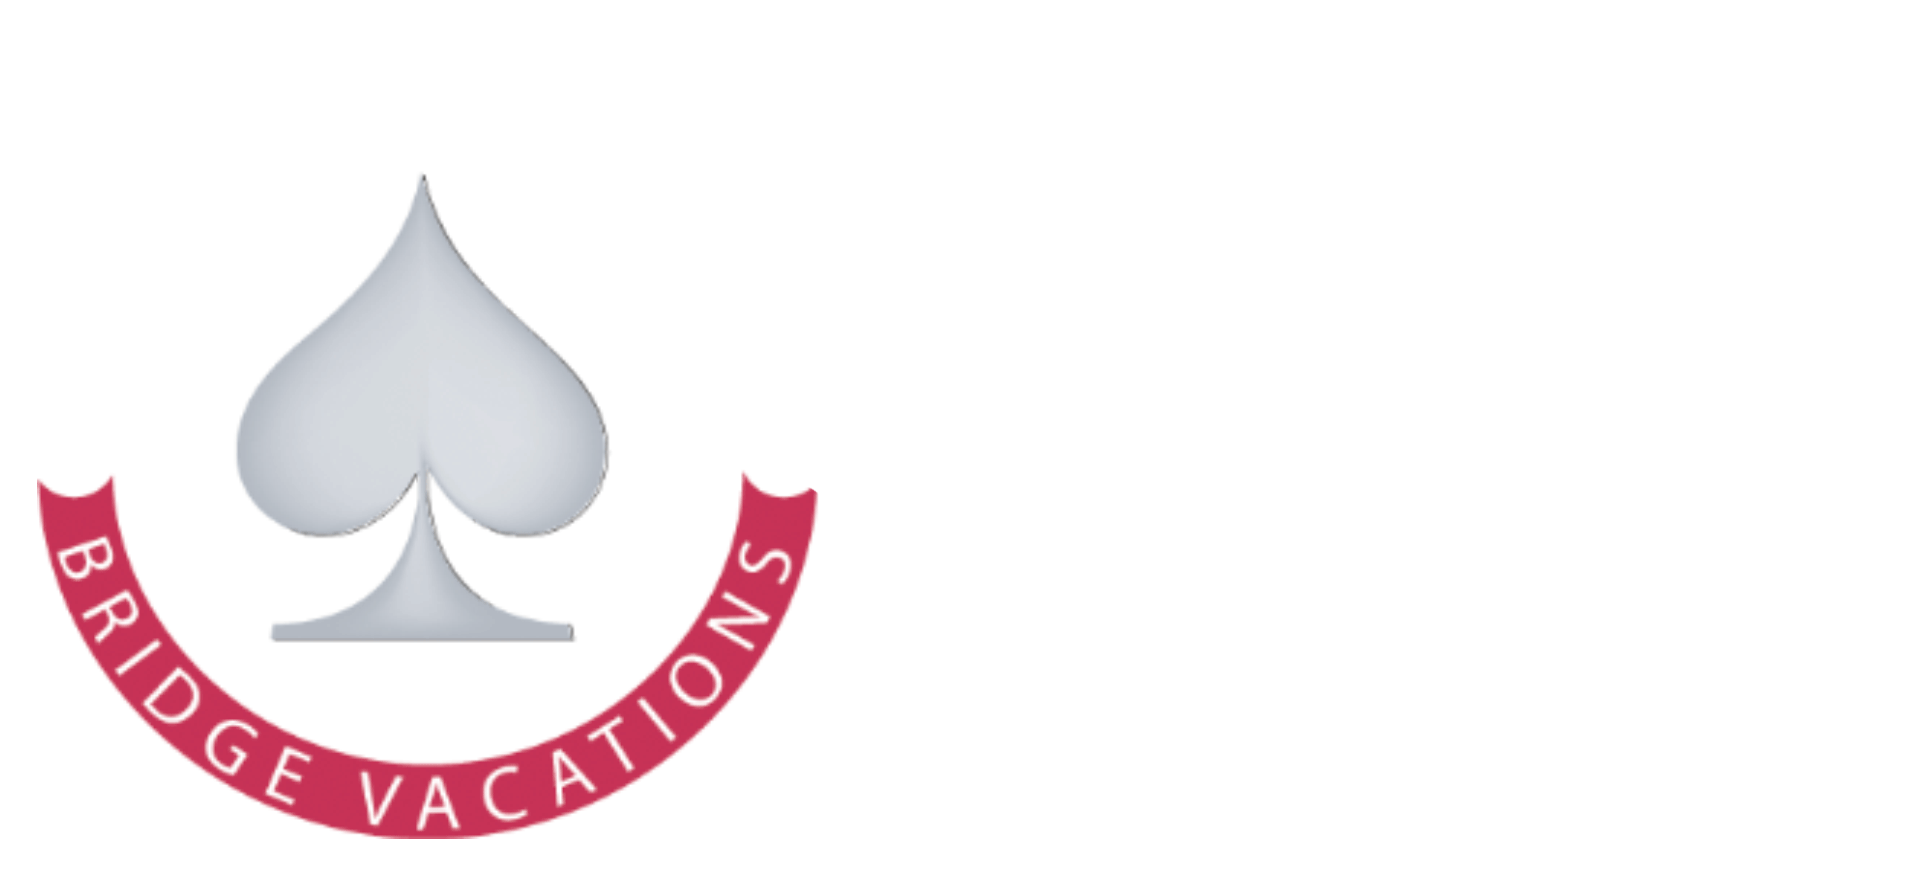 FANTONI VACATIONS